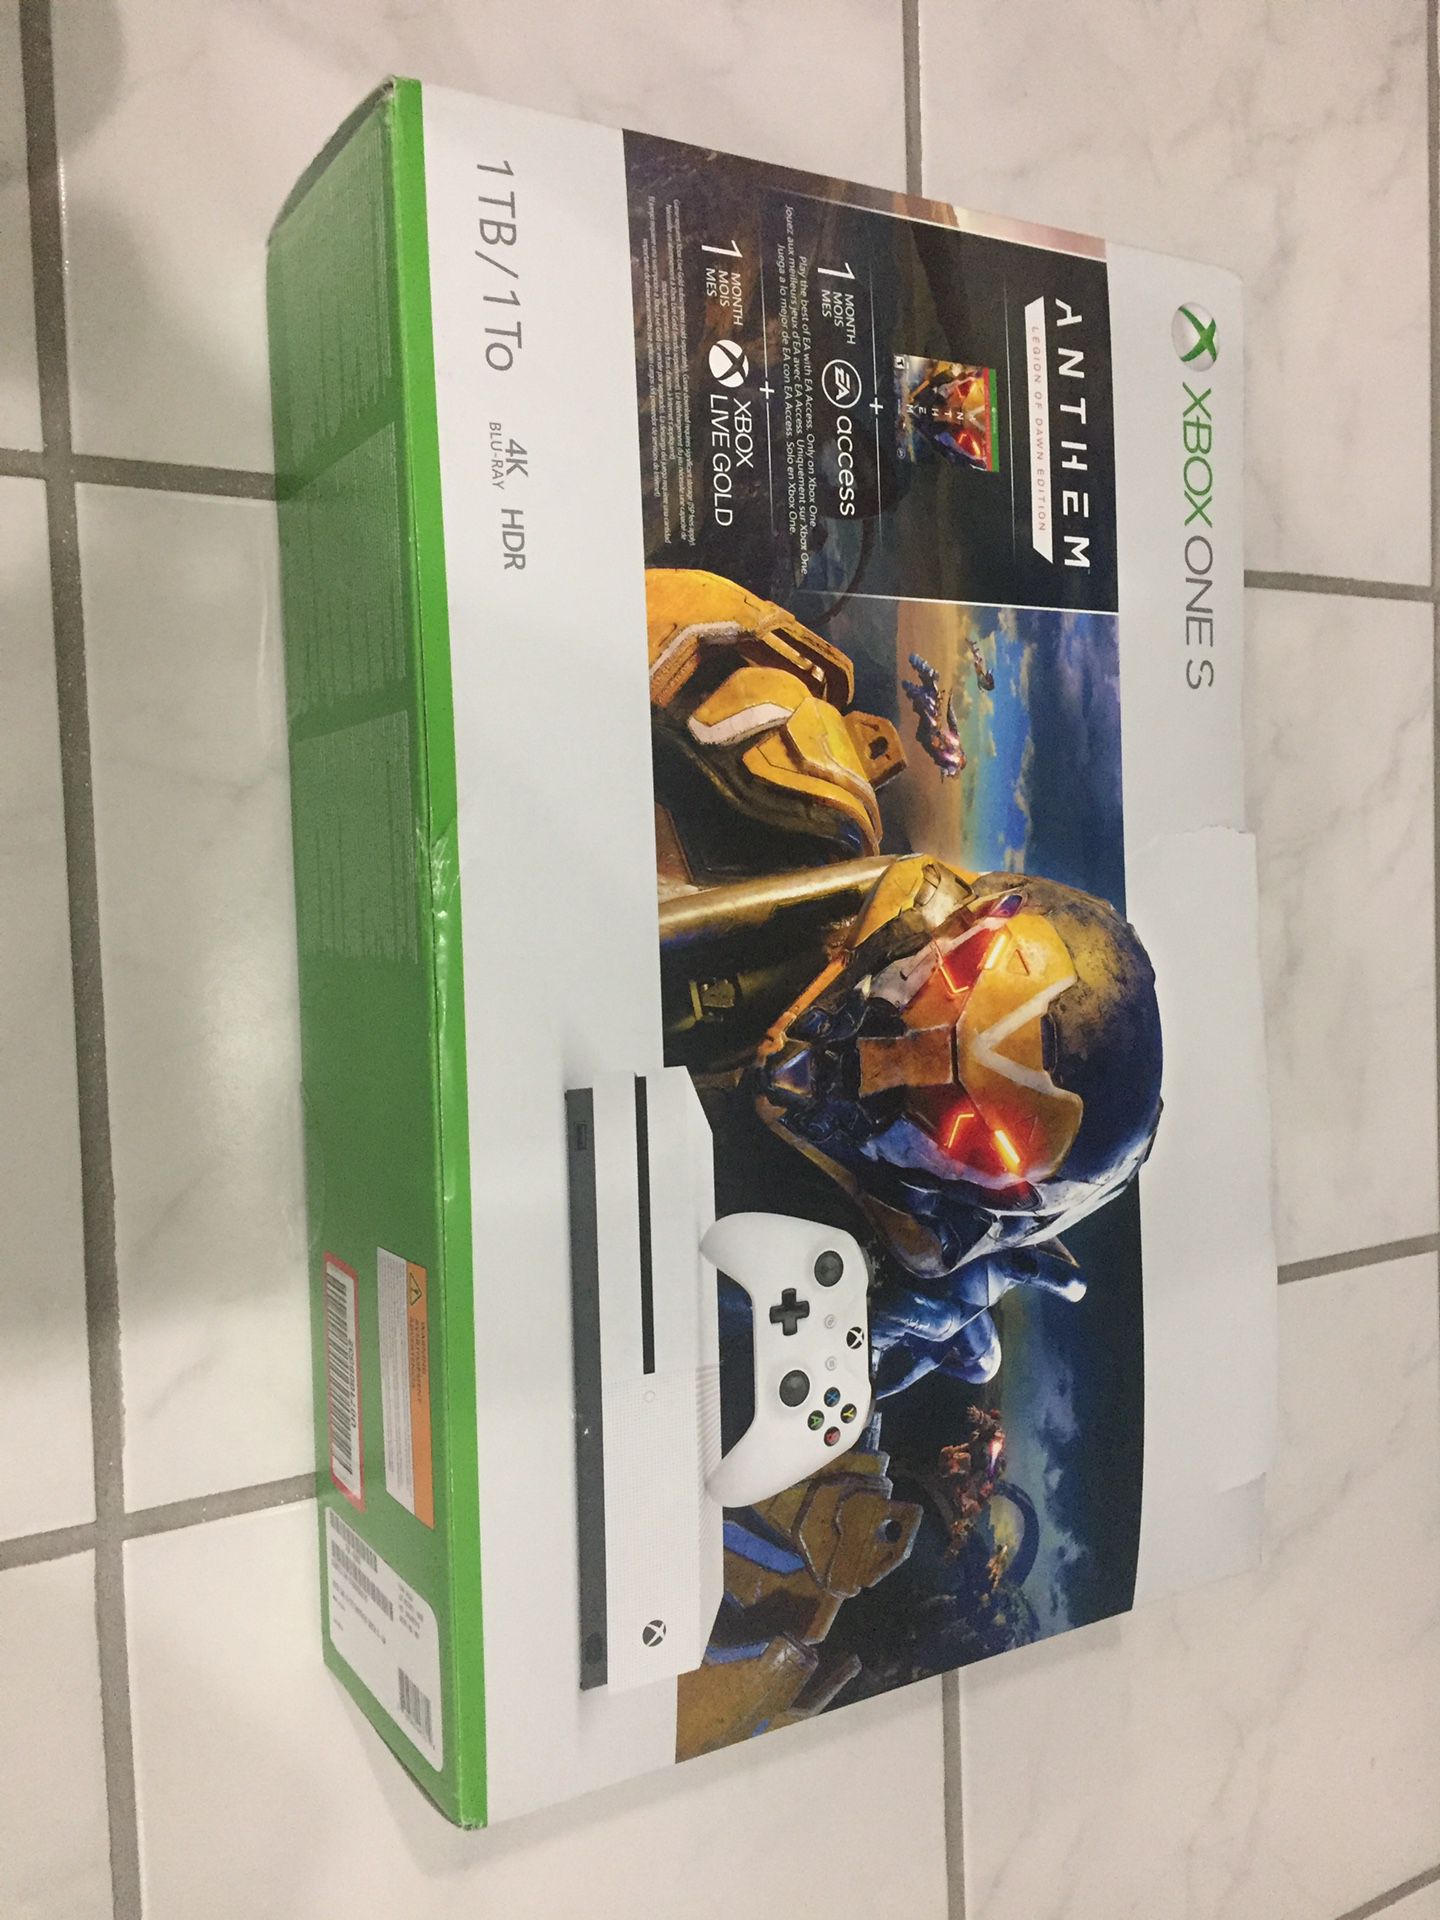 Xbox One 1TB brand new